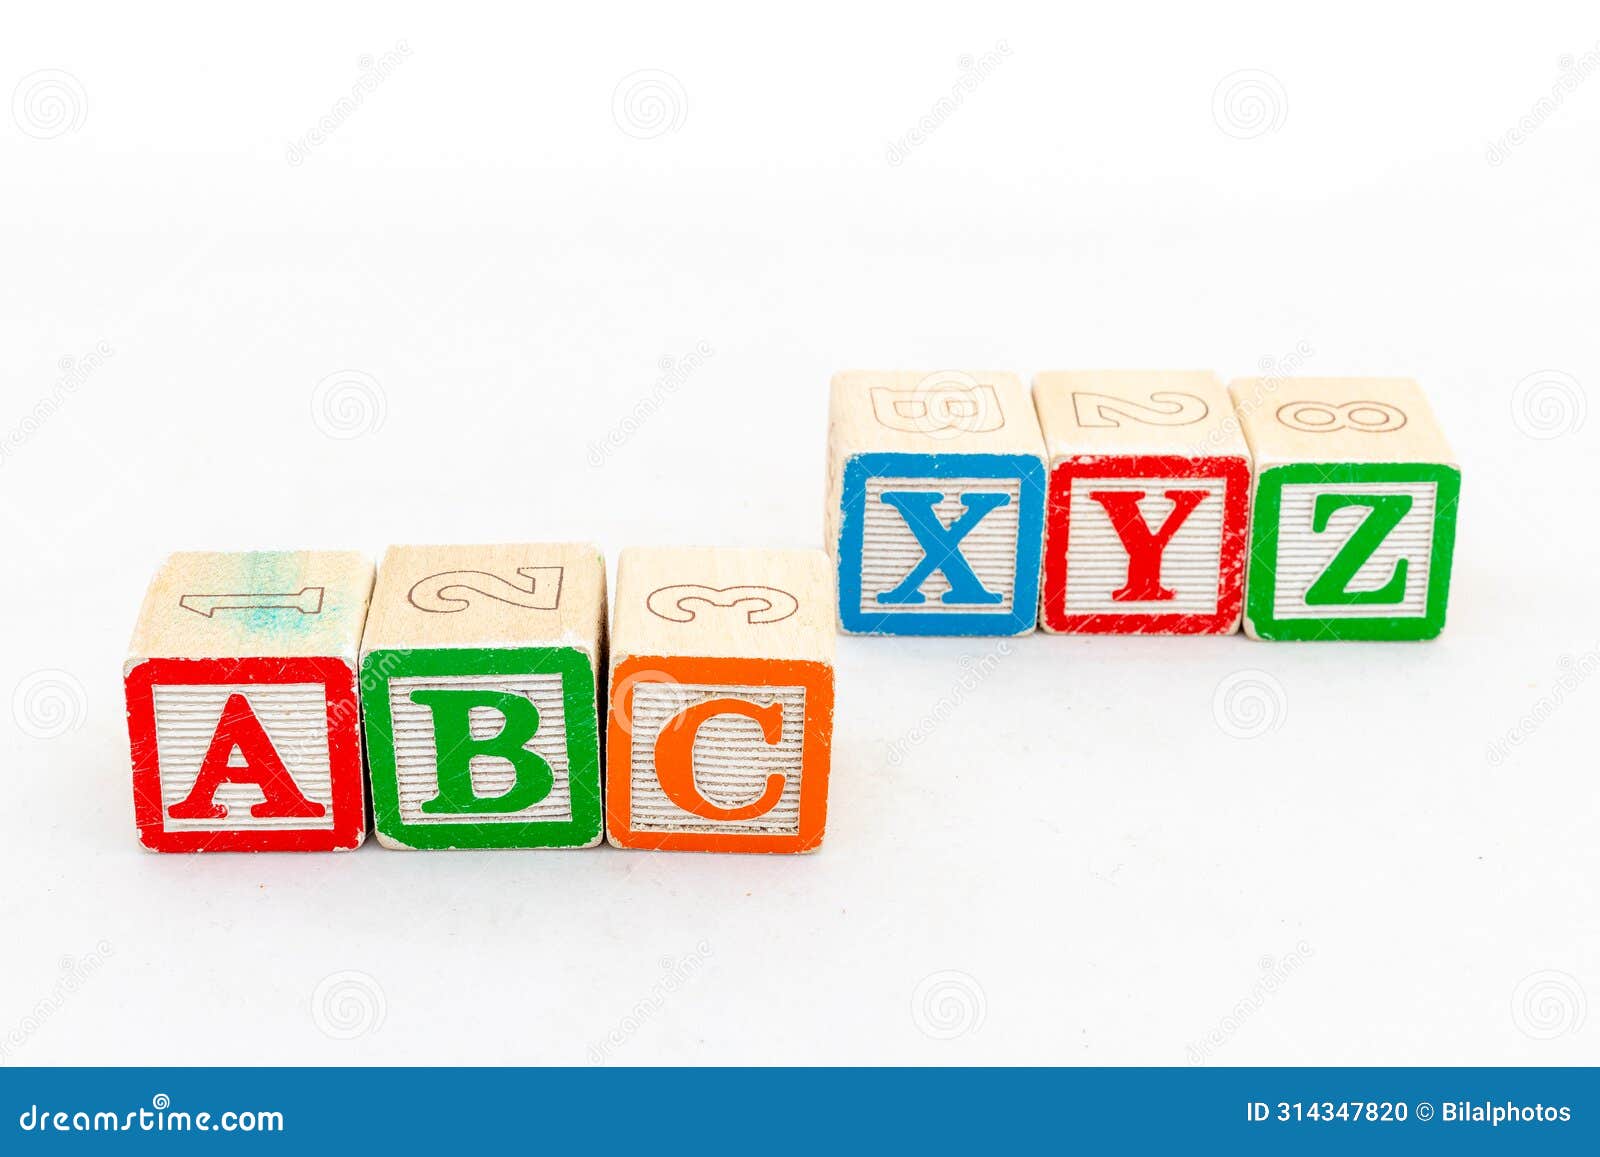 abc and xyz wooden alphabet blocks  on white background